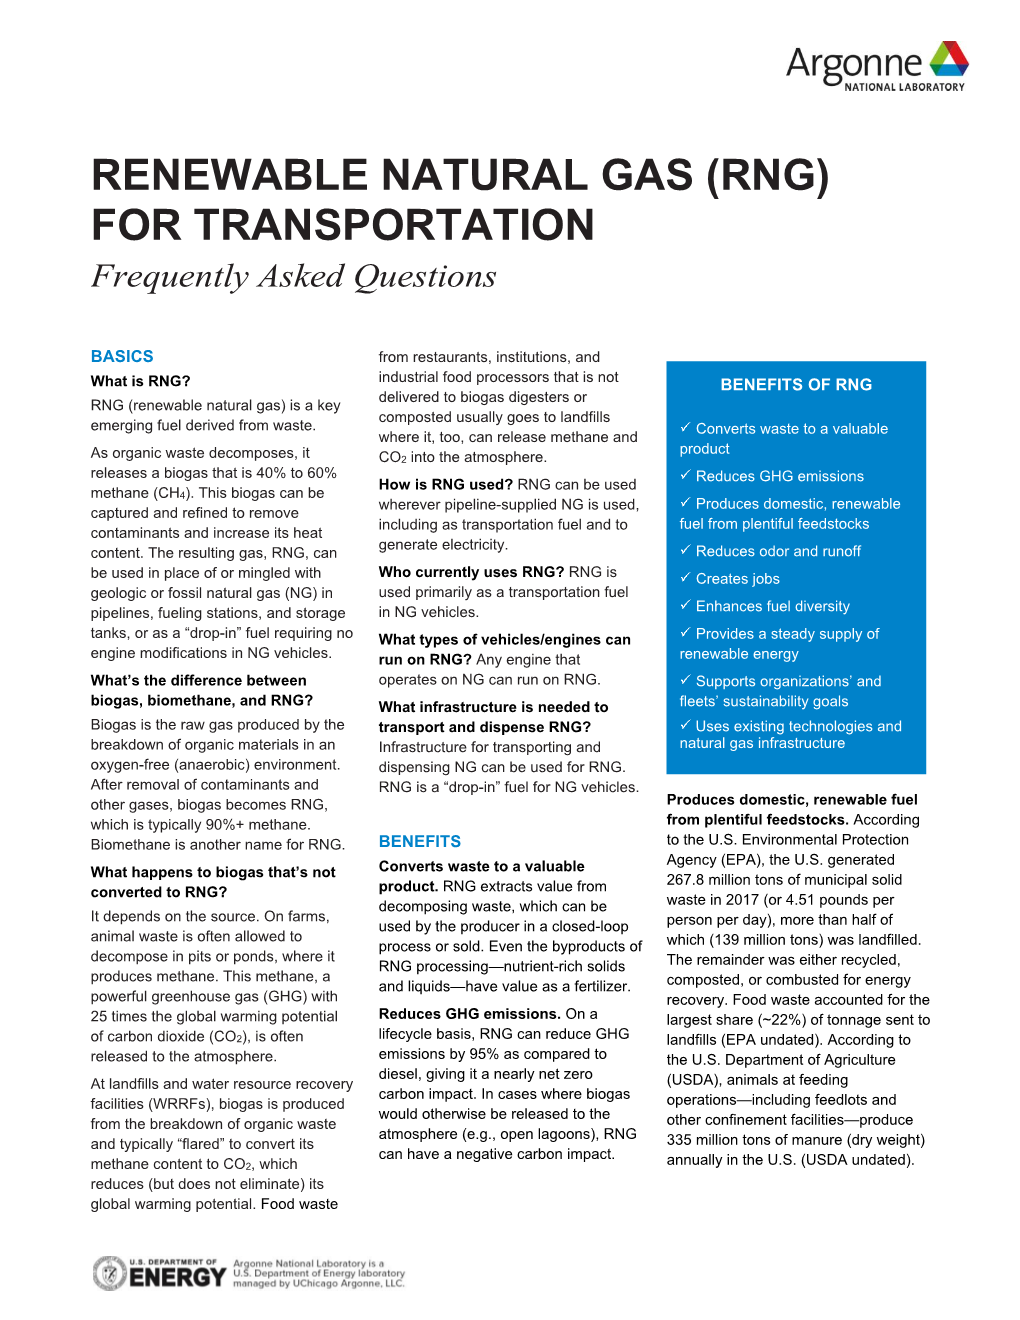 Renewable Natural Gas (Rng) for Transportation